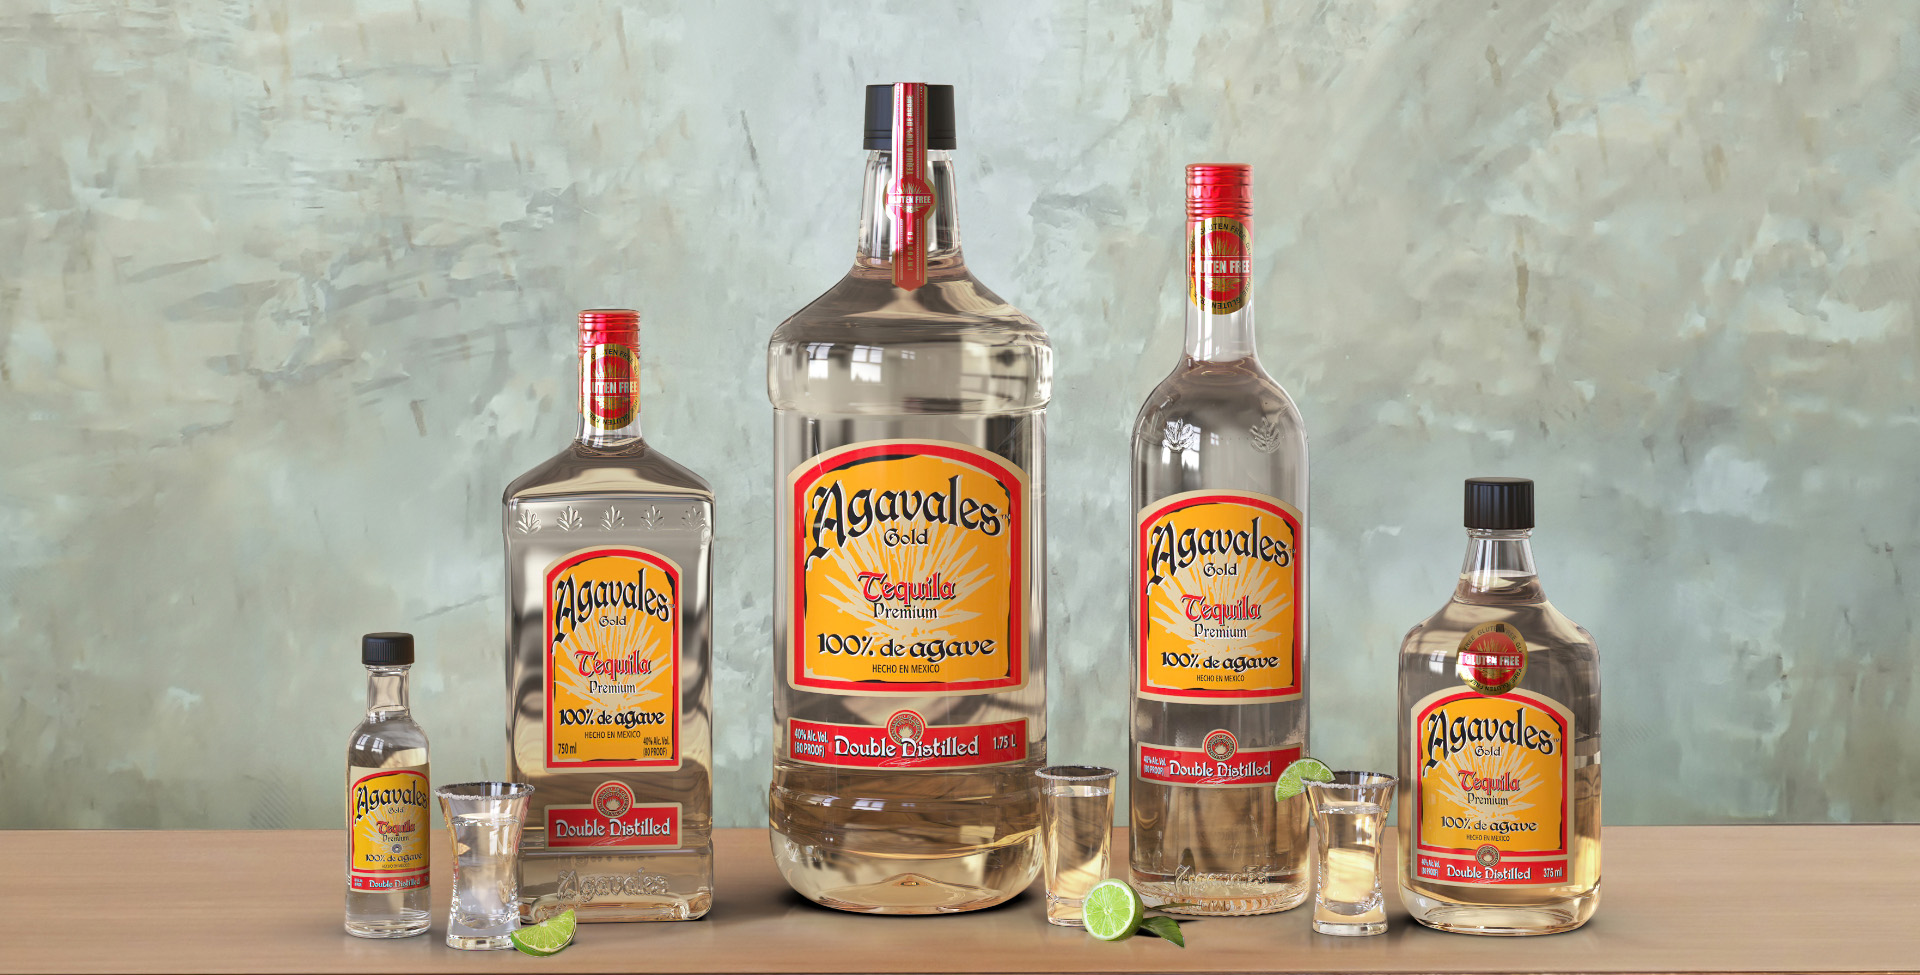 Agavales Tequila Original Gold Main Lineup